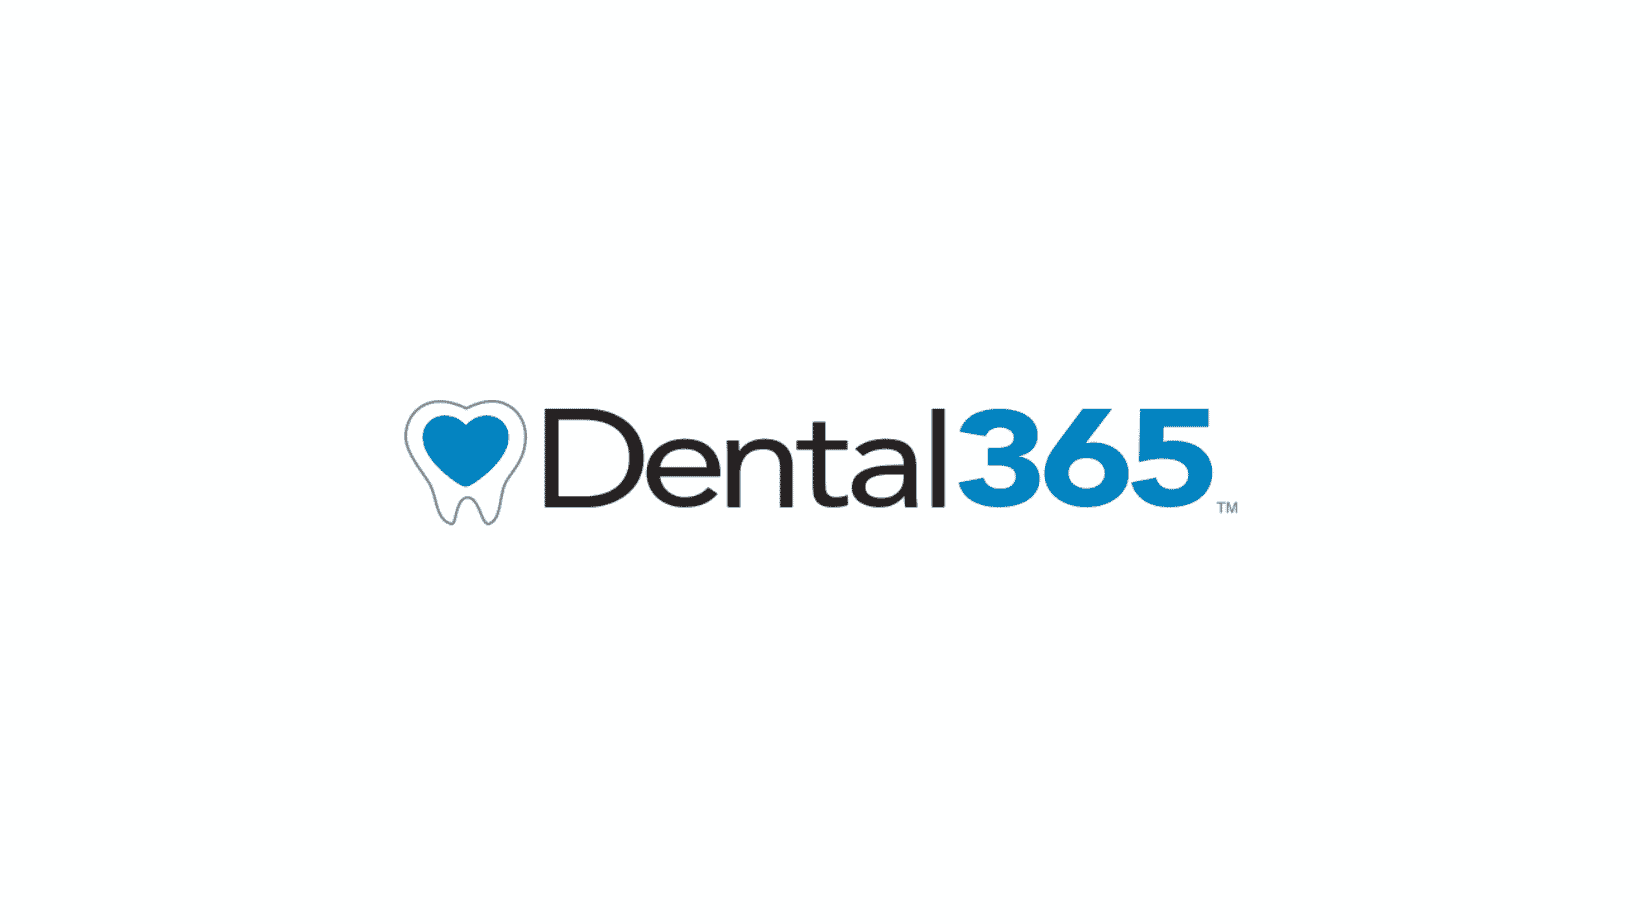 Dental365 Press Release